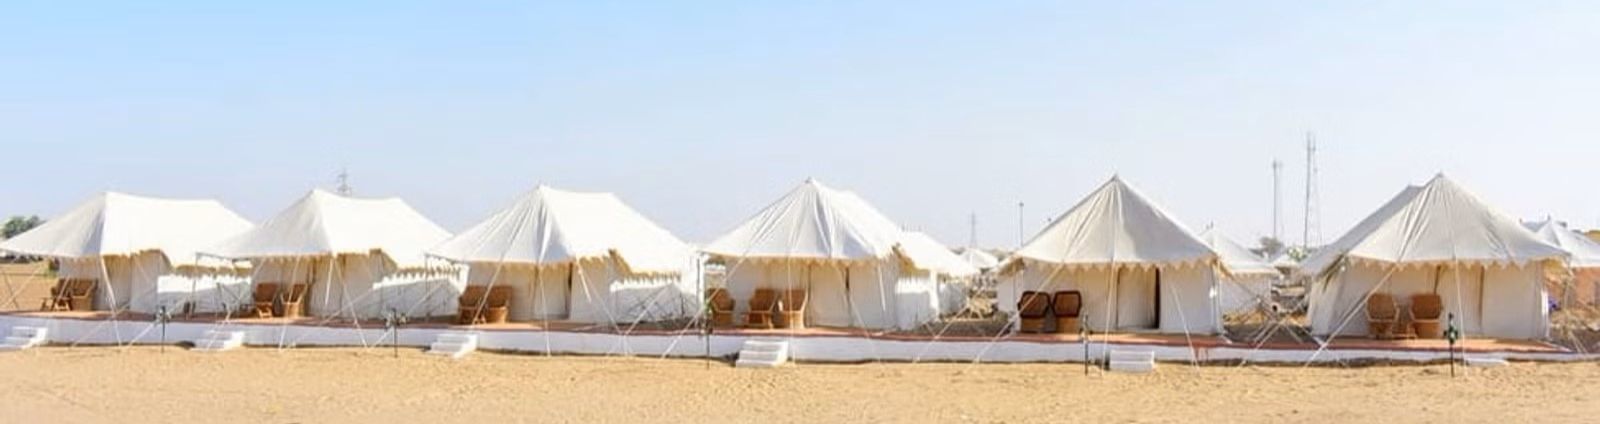 desert camp rajasthan